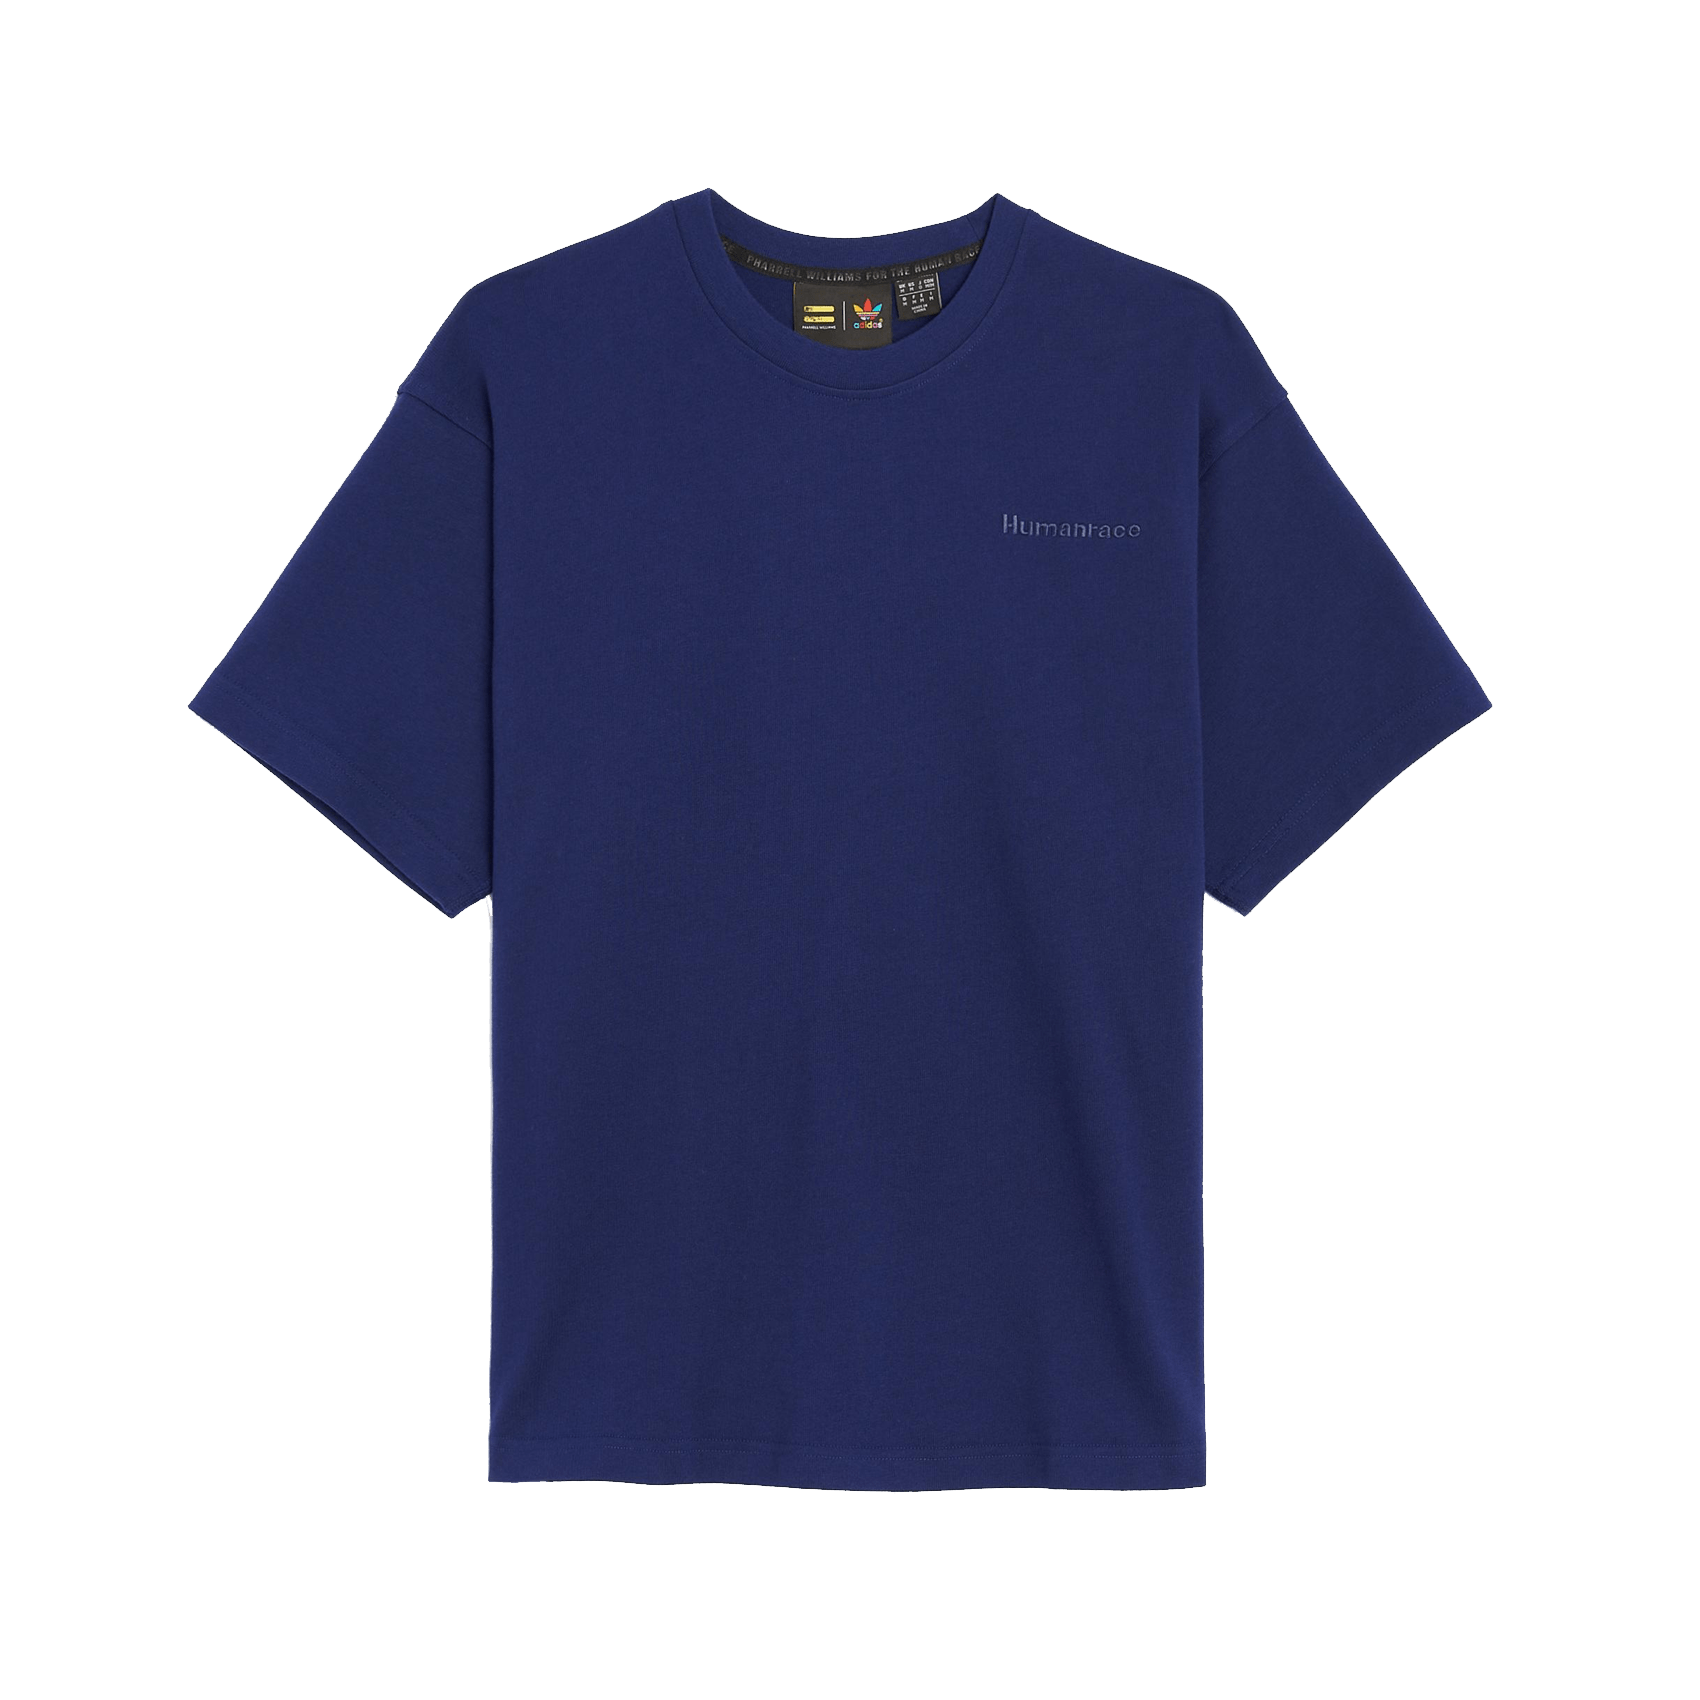 Pw Basics Shirt - Navy.